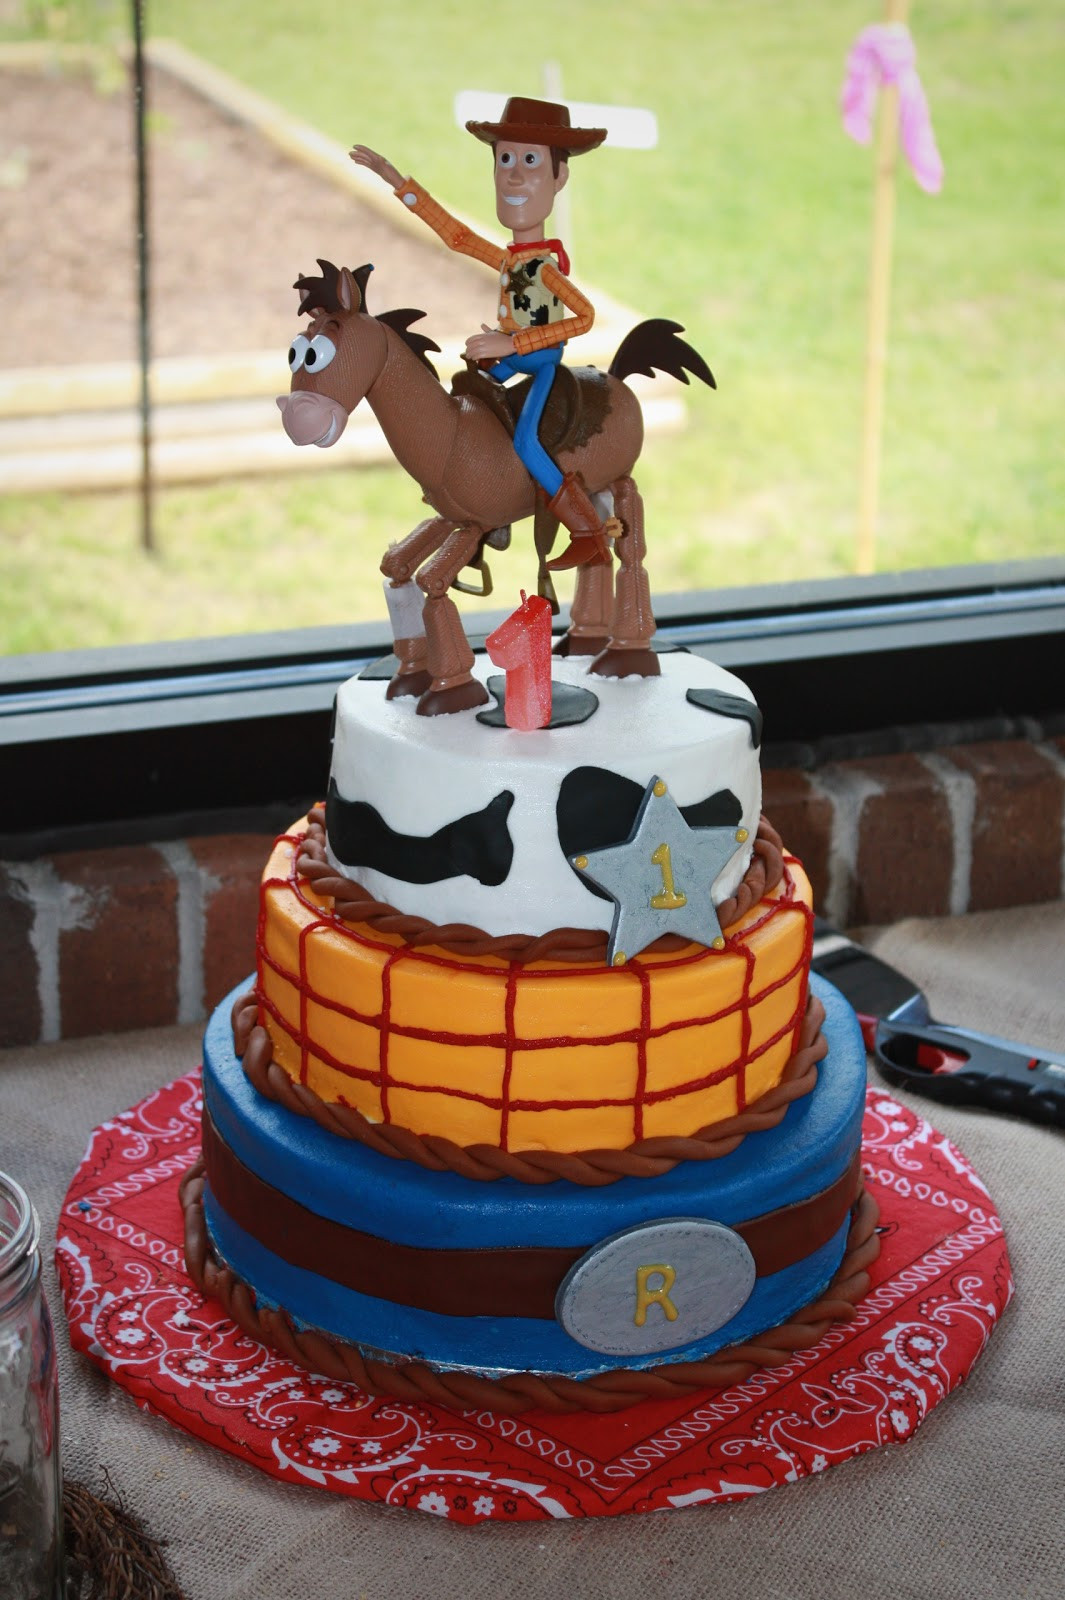 Cowboy Birthday Cake
 The Layered Cake Reid s Cowboy Birthday